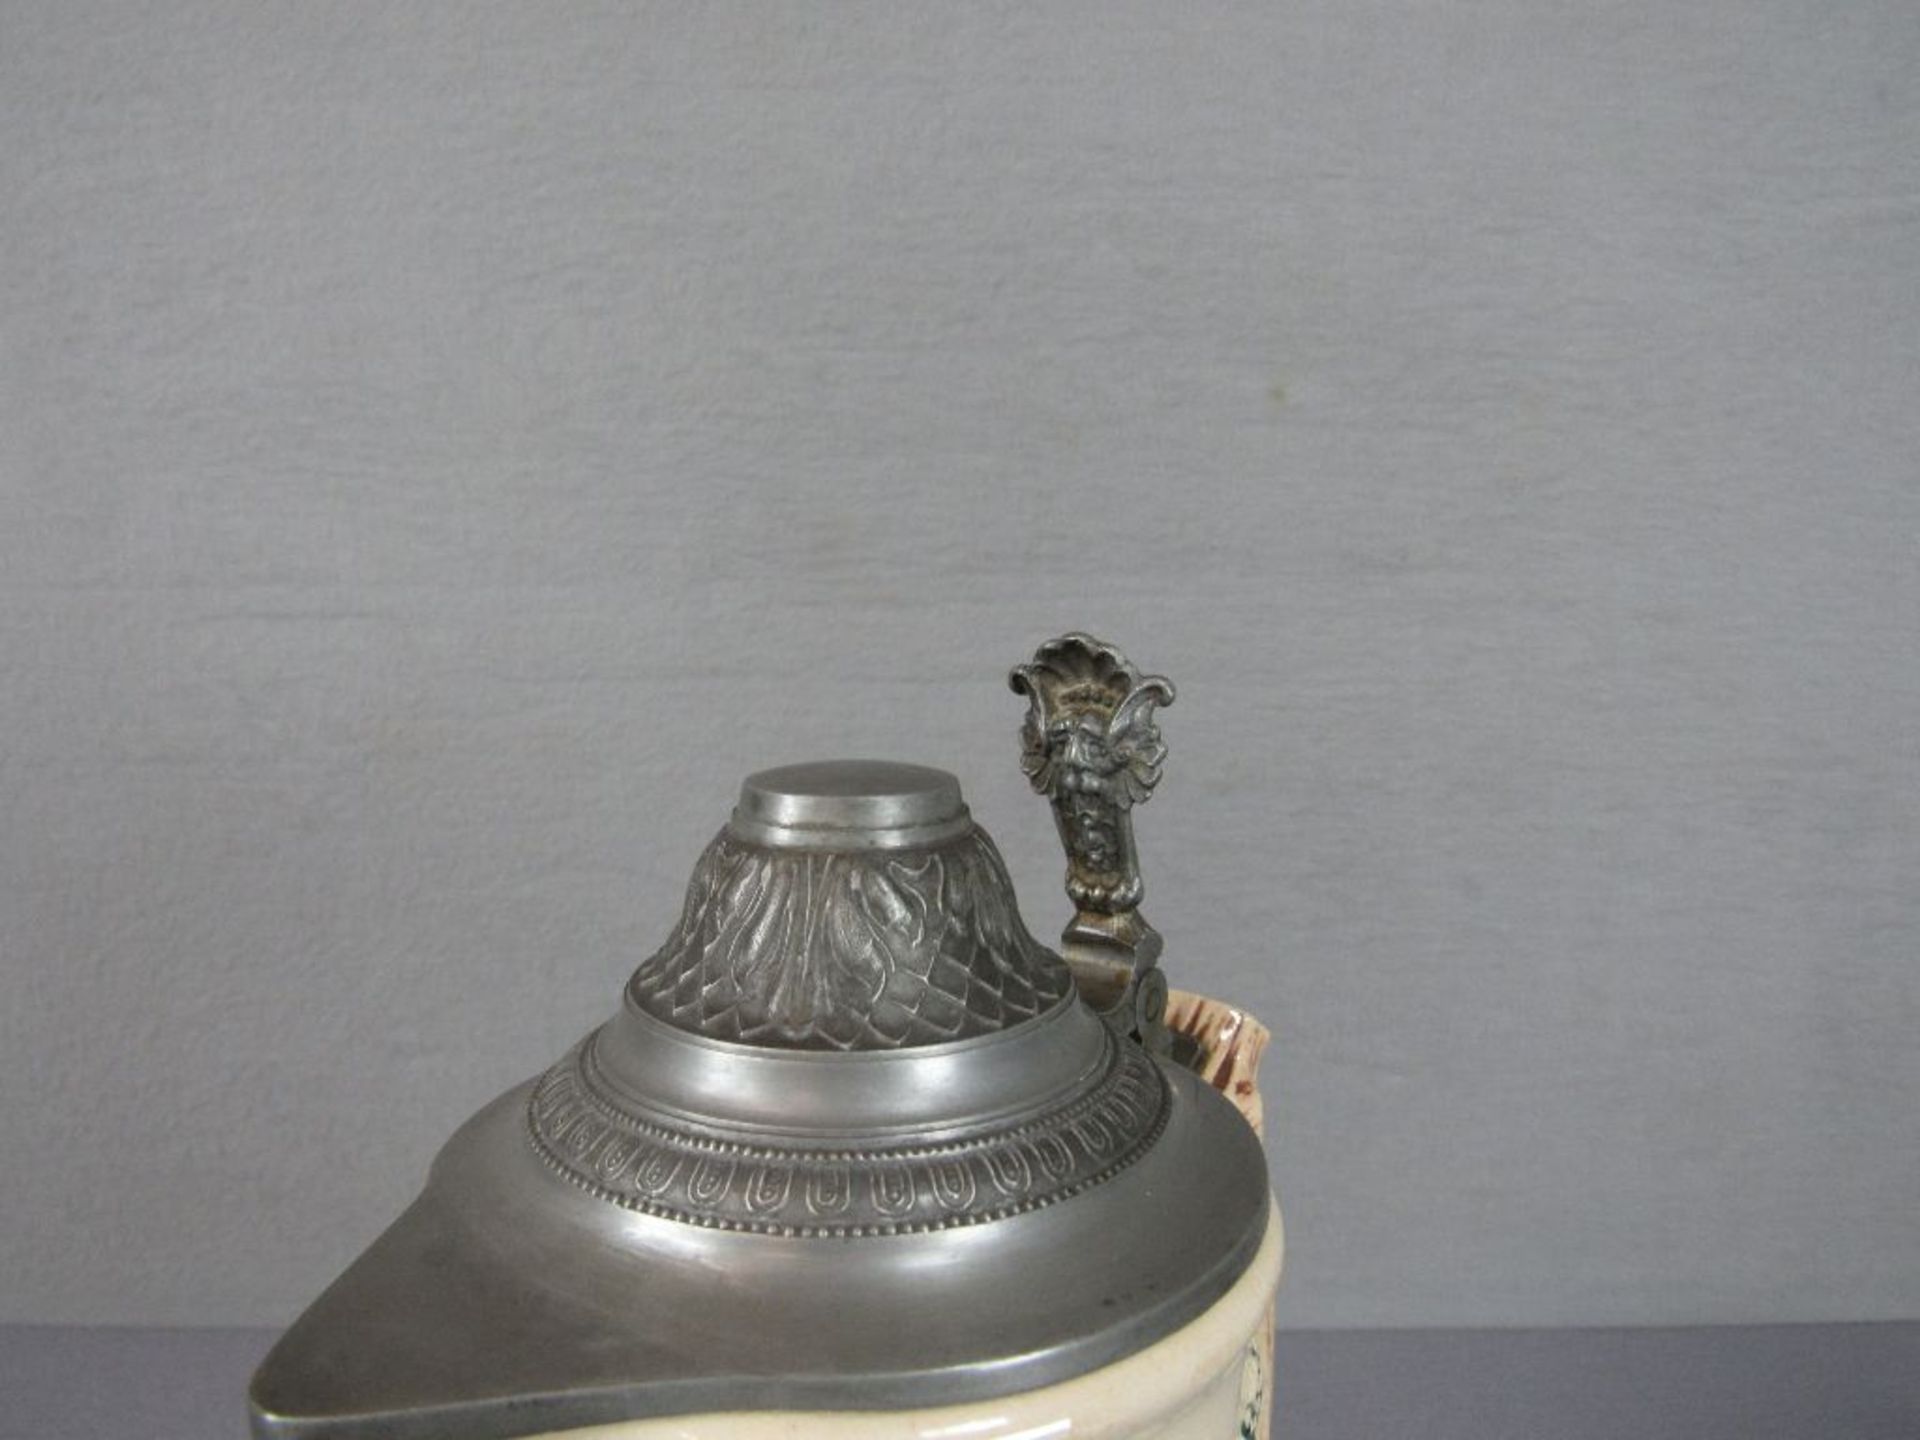 Großer Henkelbierkrug lasierte Keramik Villeroy&Boch um 1900 ca.32cm hoch - Image 7 of 7